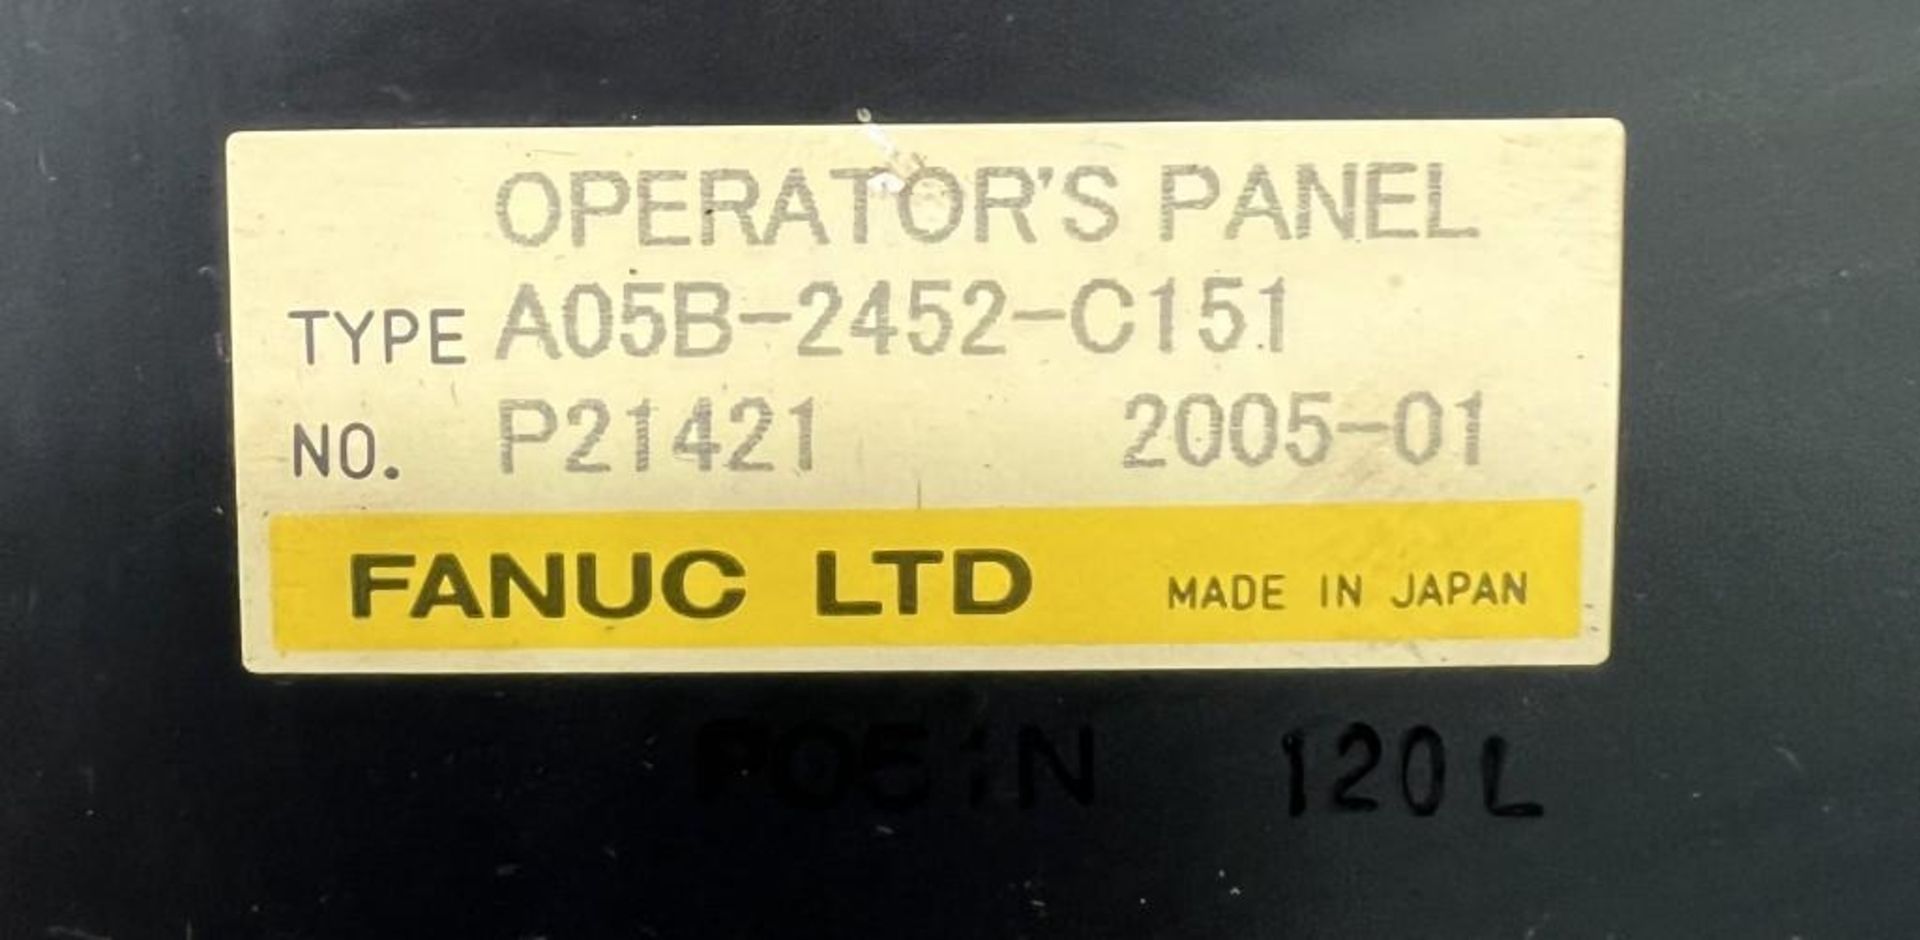 Lor of (2) Fanuc #A05B-2452-C151 Operator's Panels - Image 3 of 6